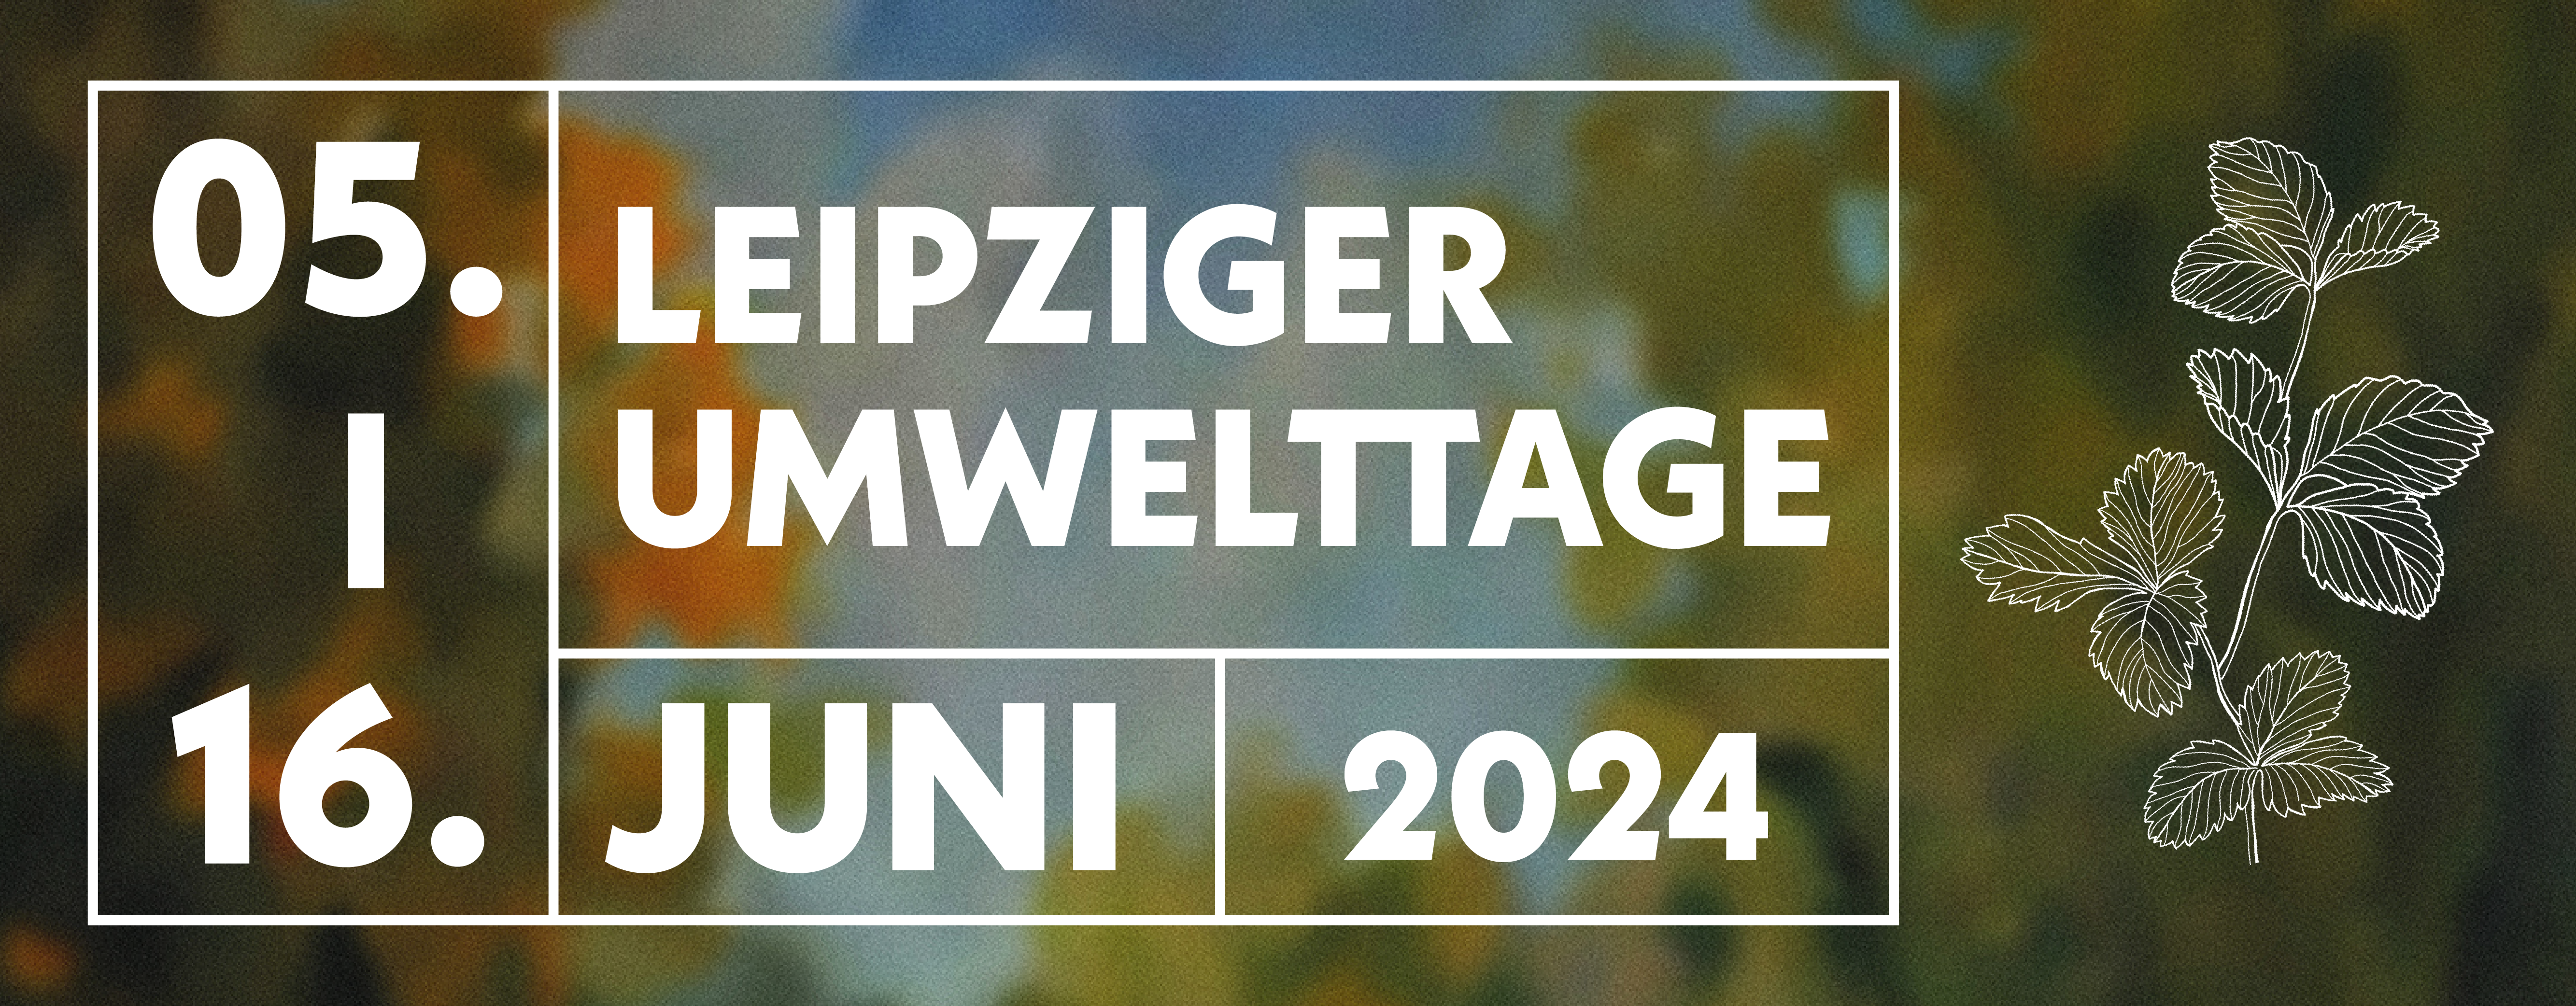 Leipziger Umwelttage 2024